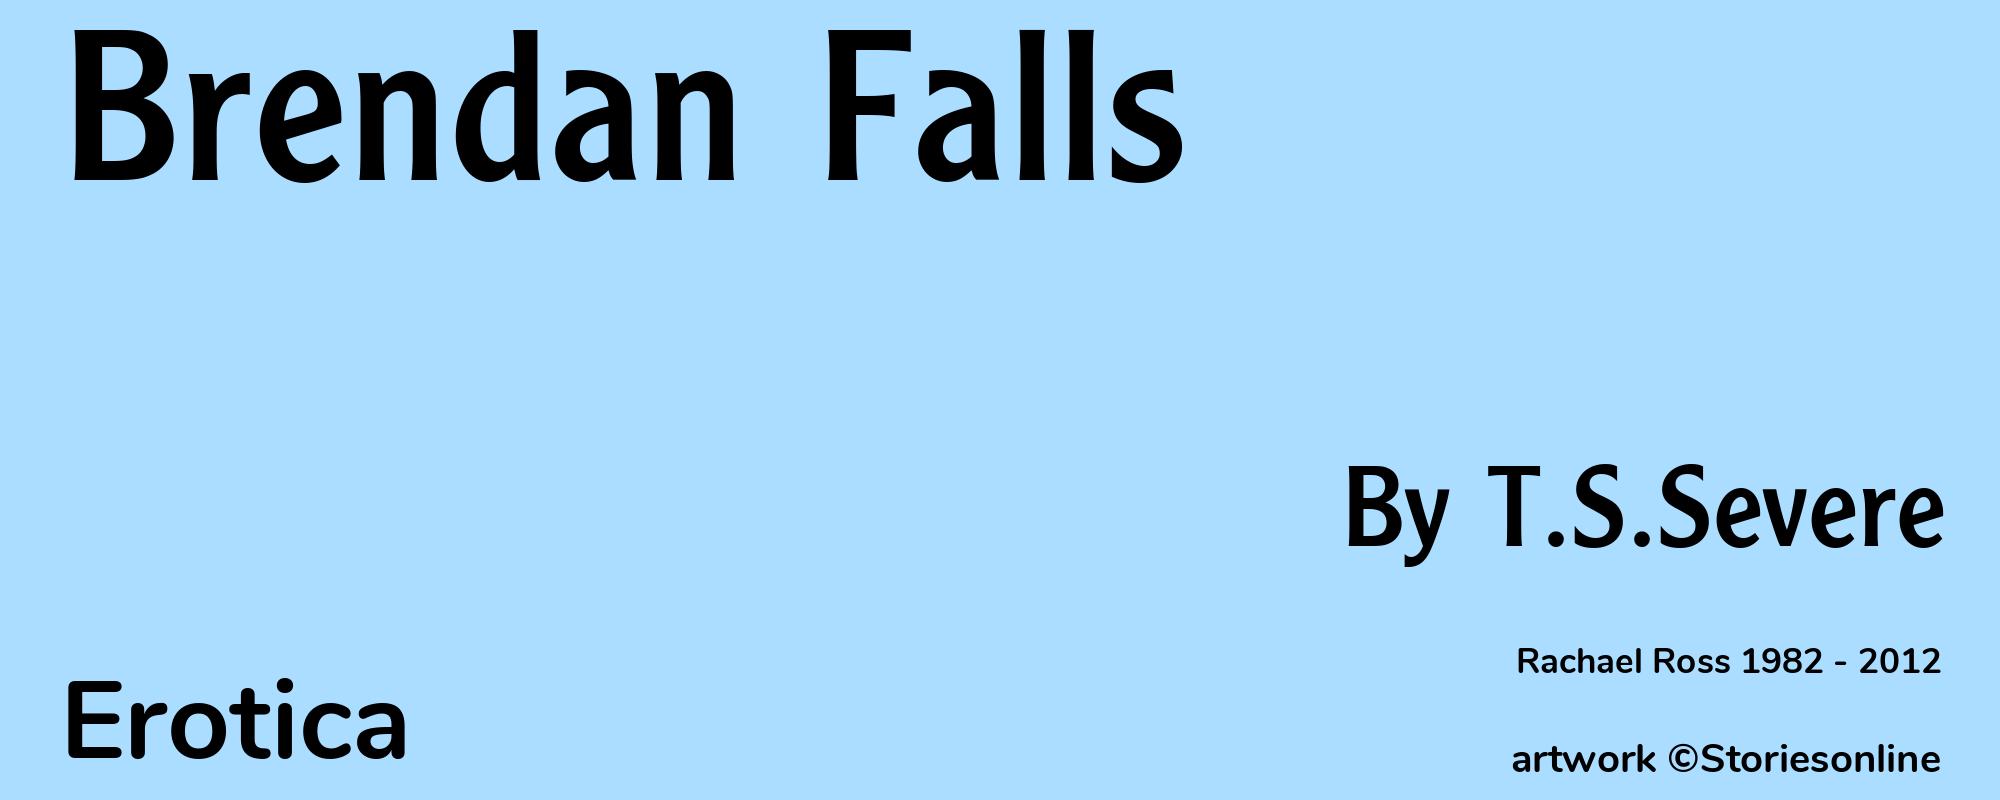 Brendan Falls - Cover